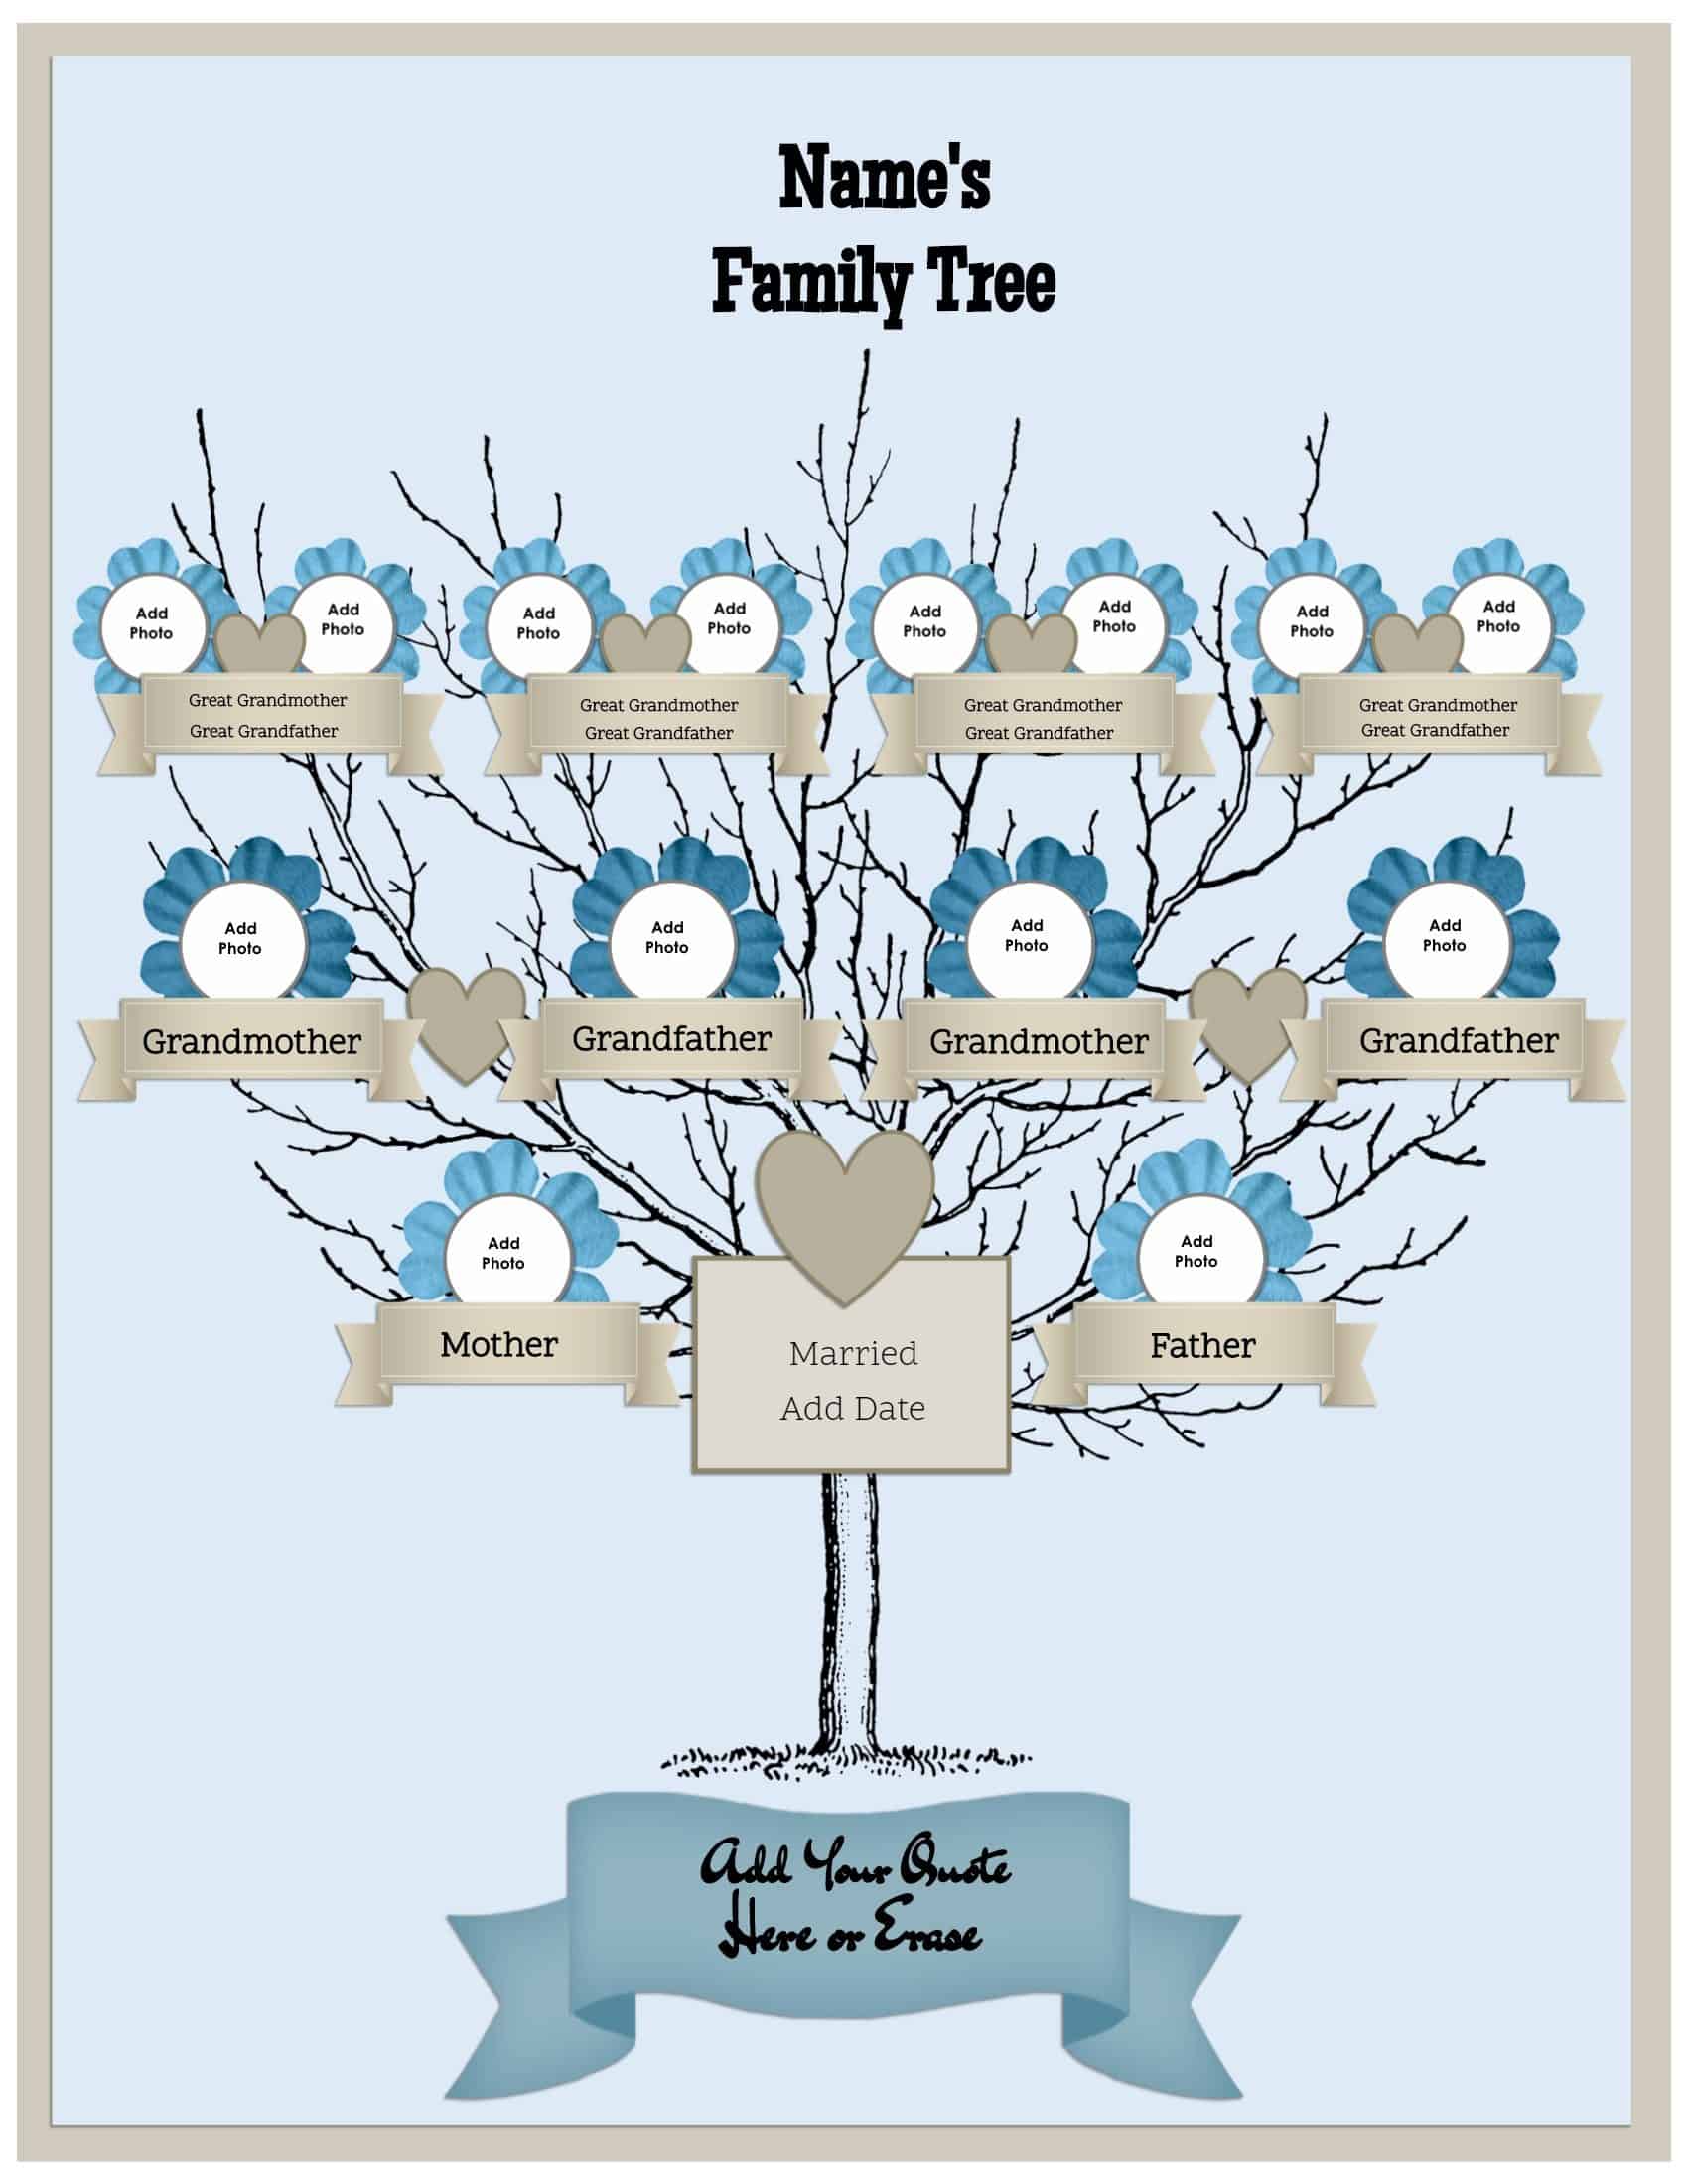 ancestry family tree builder